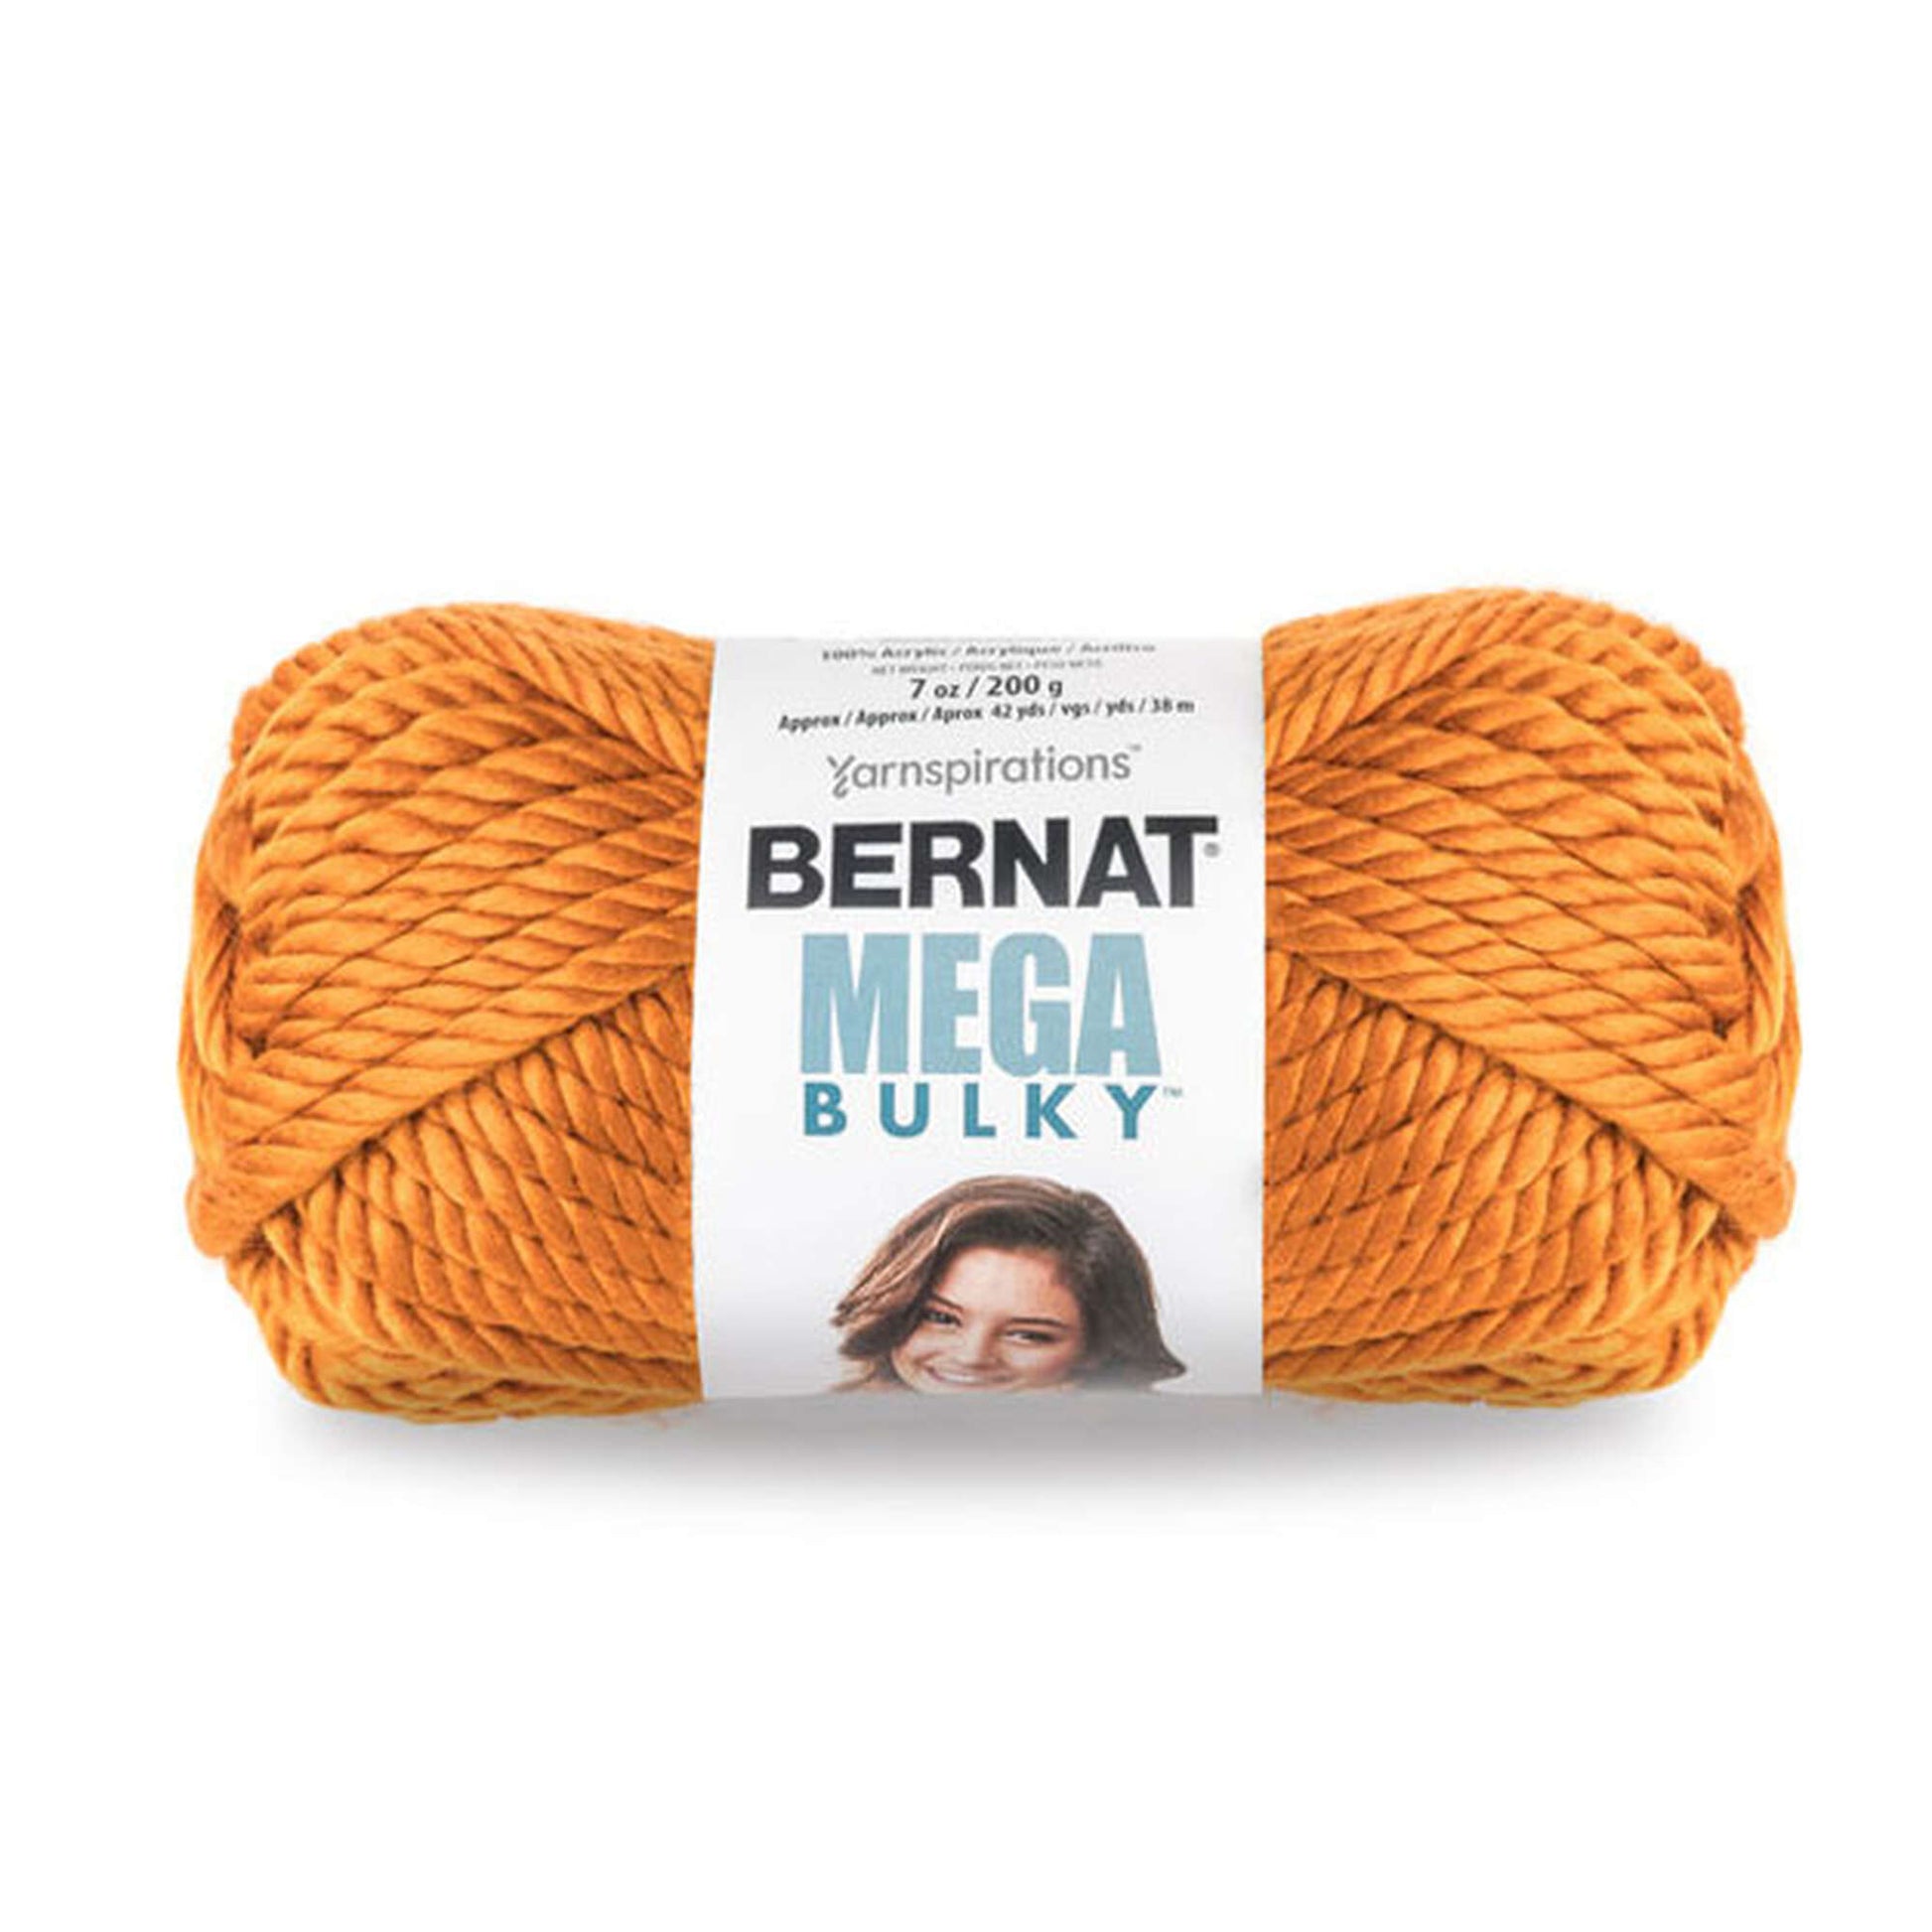 Bernat Mega Bulky Yarn - Discontinued Shades Pumpkin